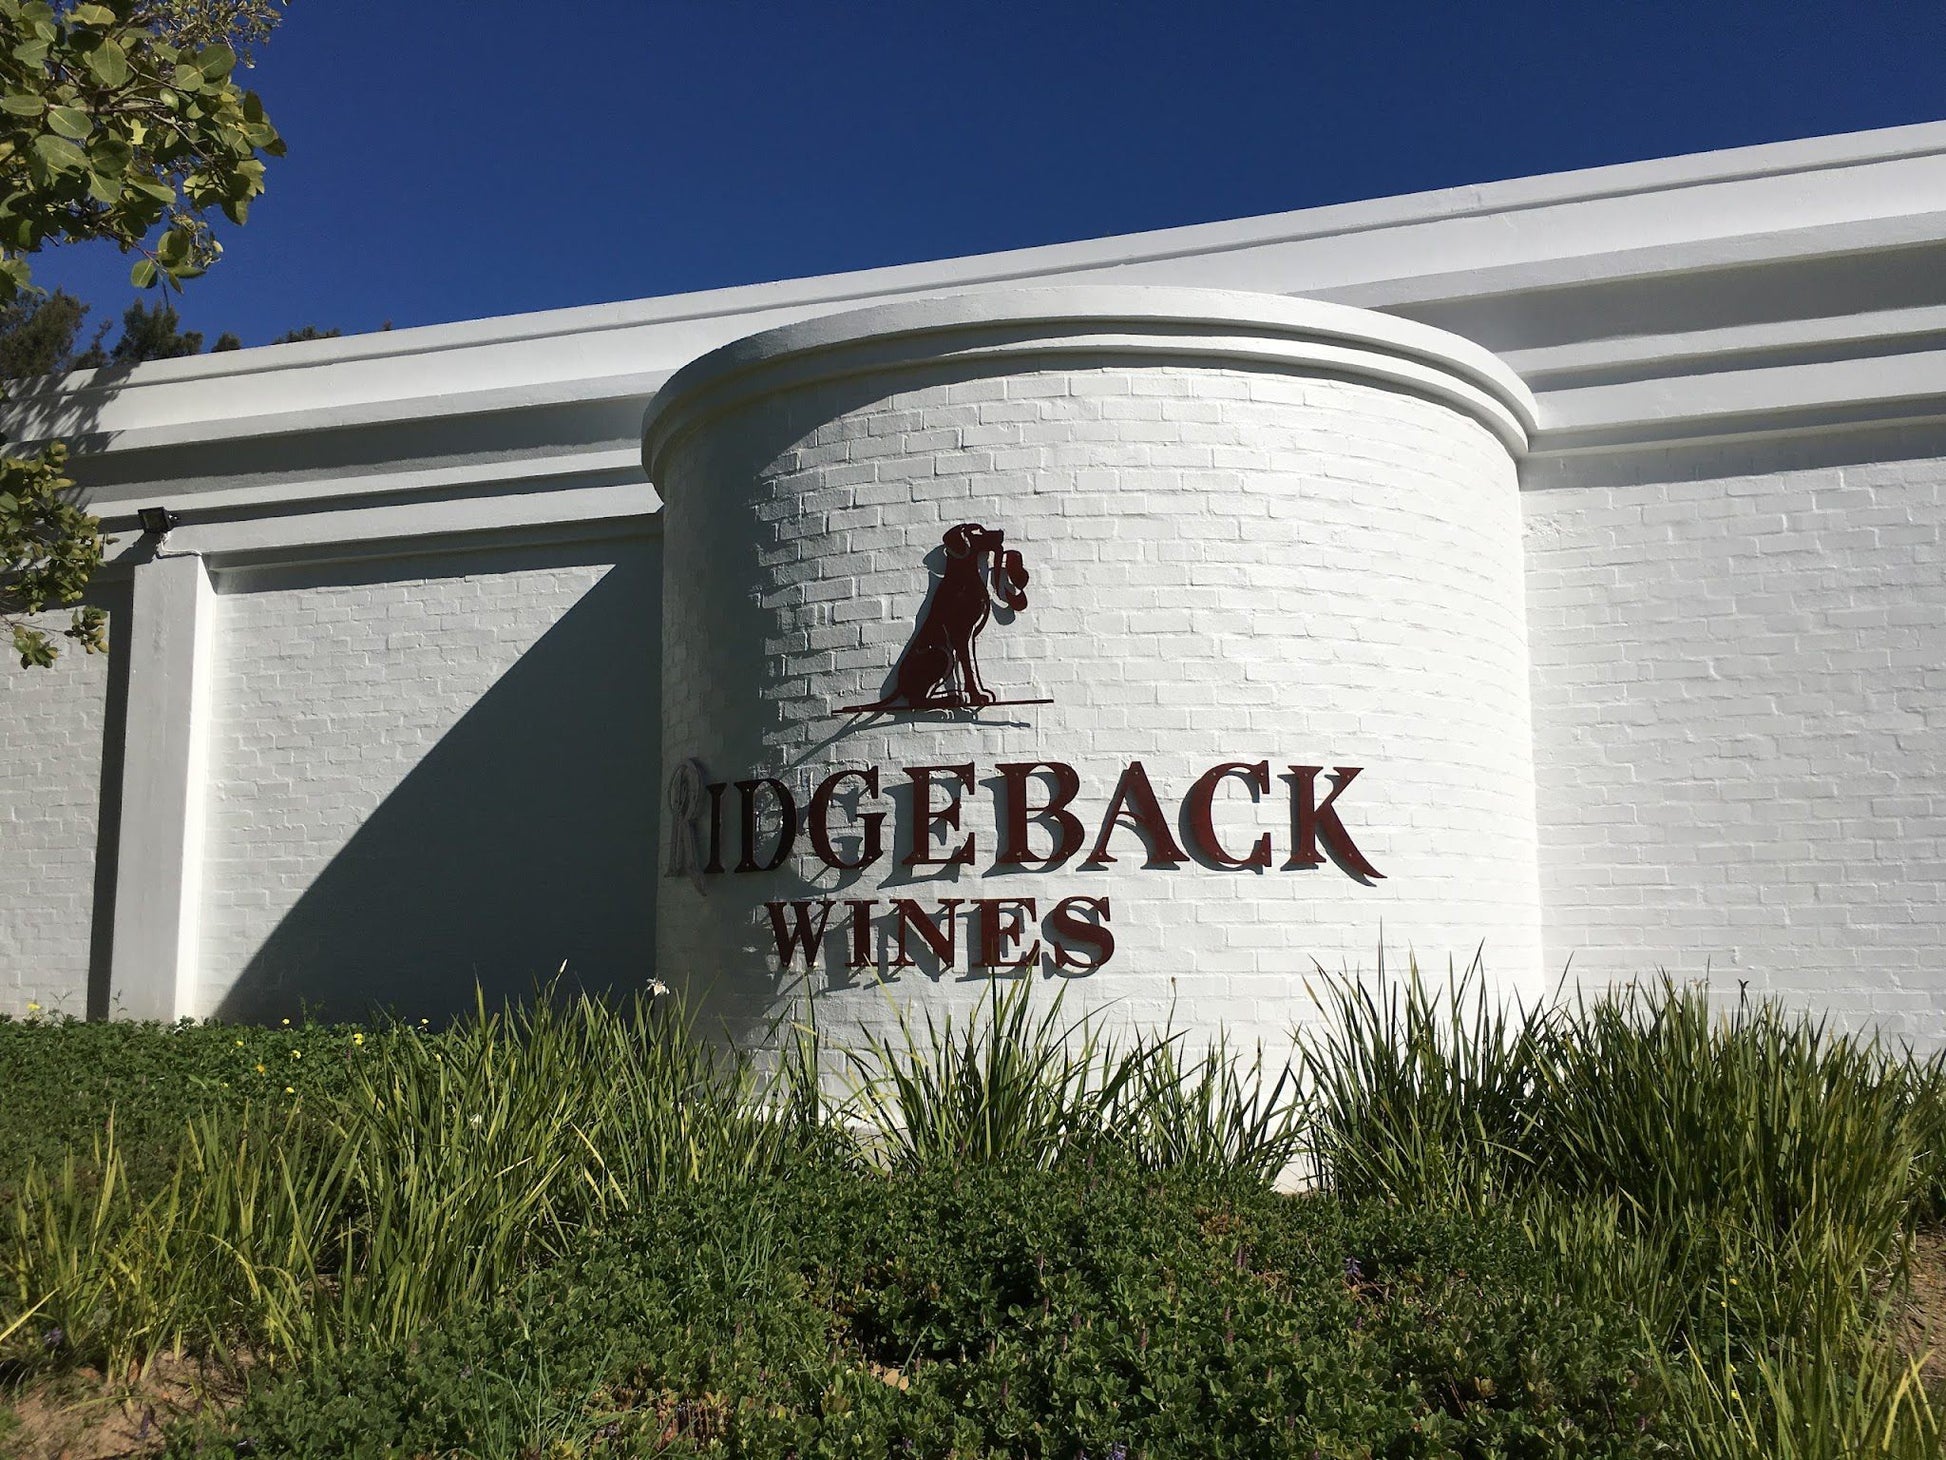  Ridgeback Wines